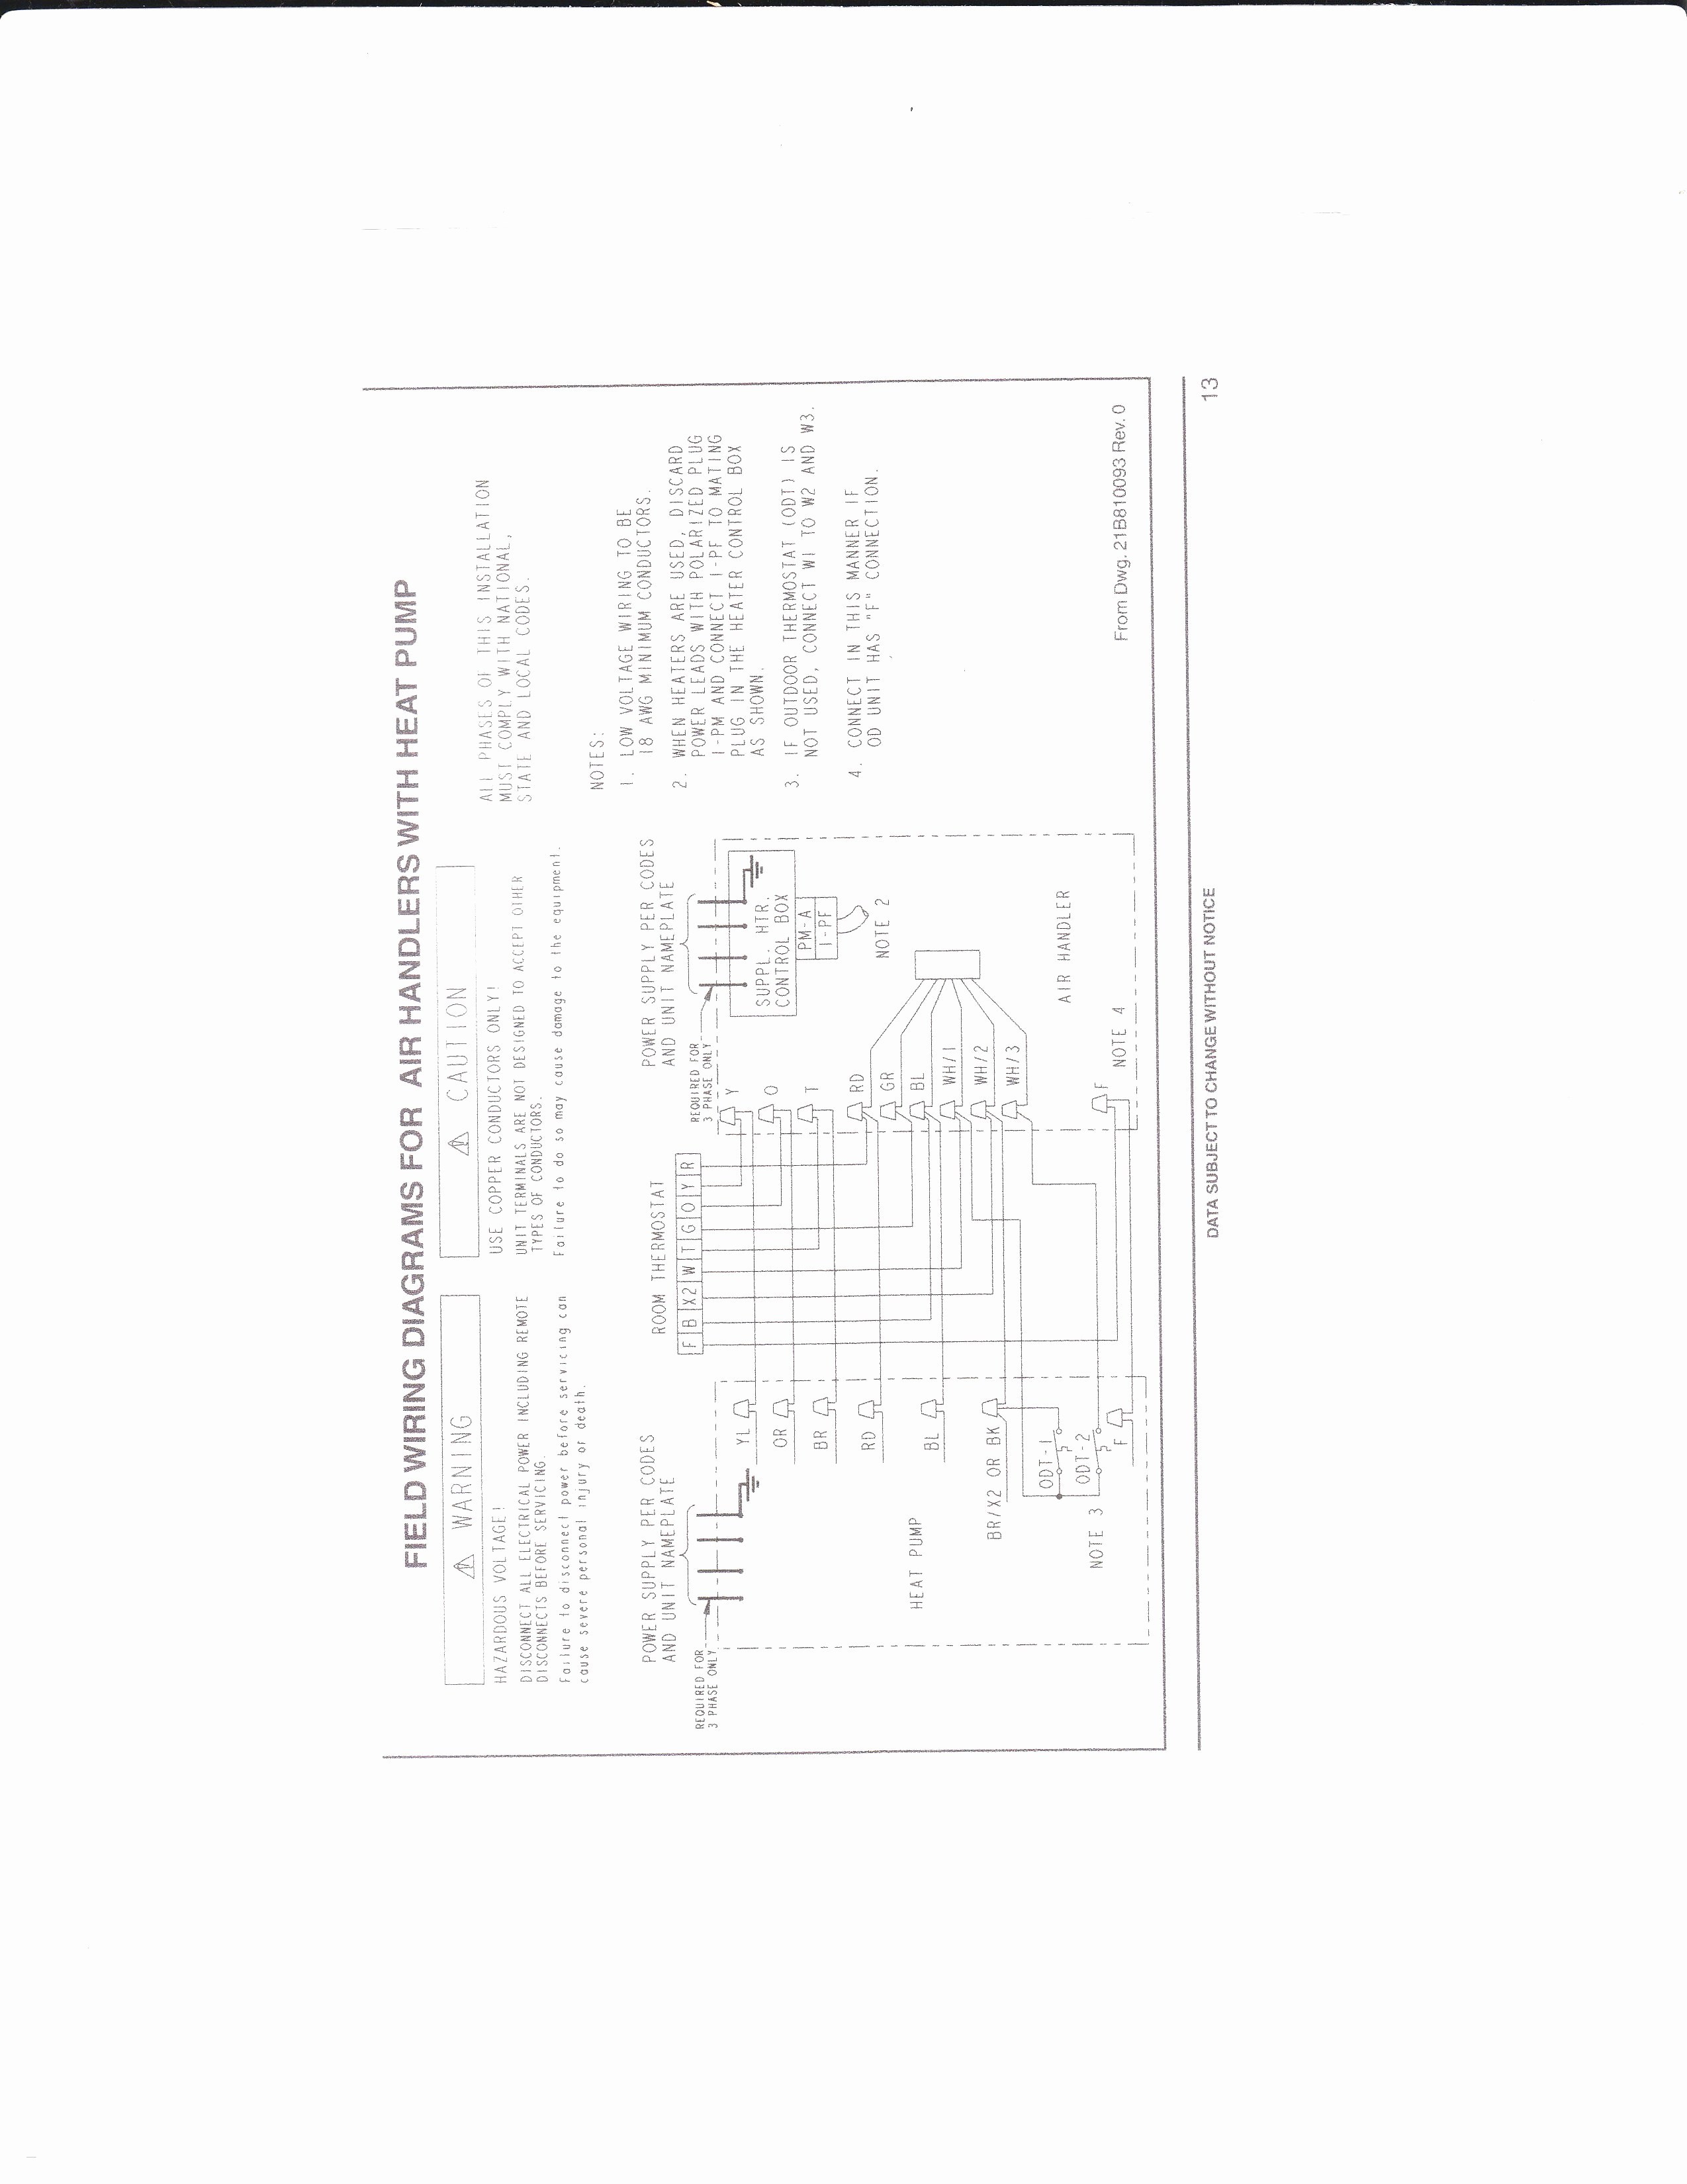 Viper 3305v Wiring Diagram F6e02d Honeywell Wiring Diagram Book Of Viper 3305v Wiring Diagram